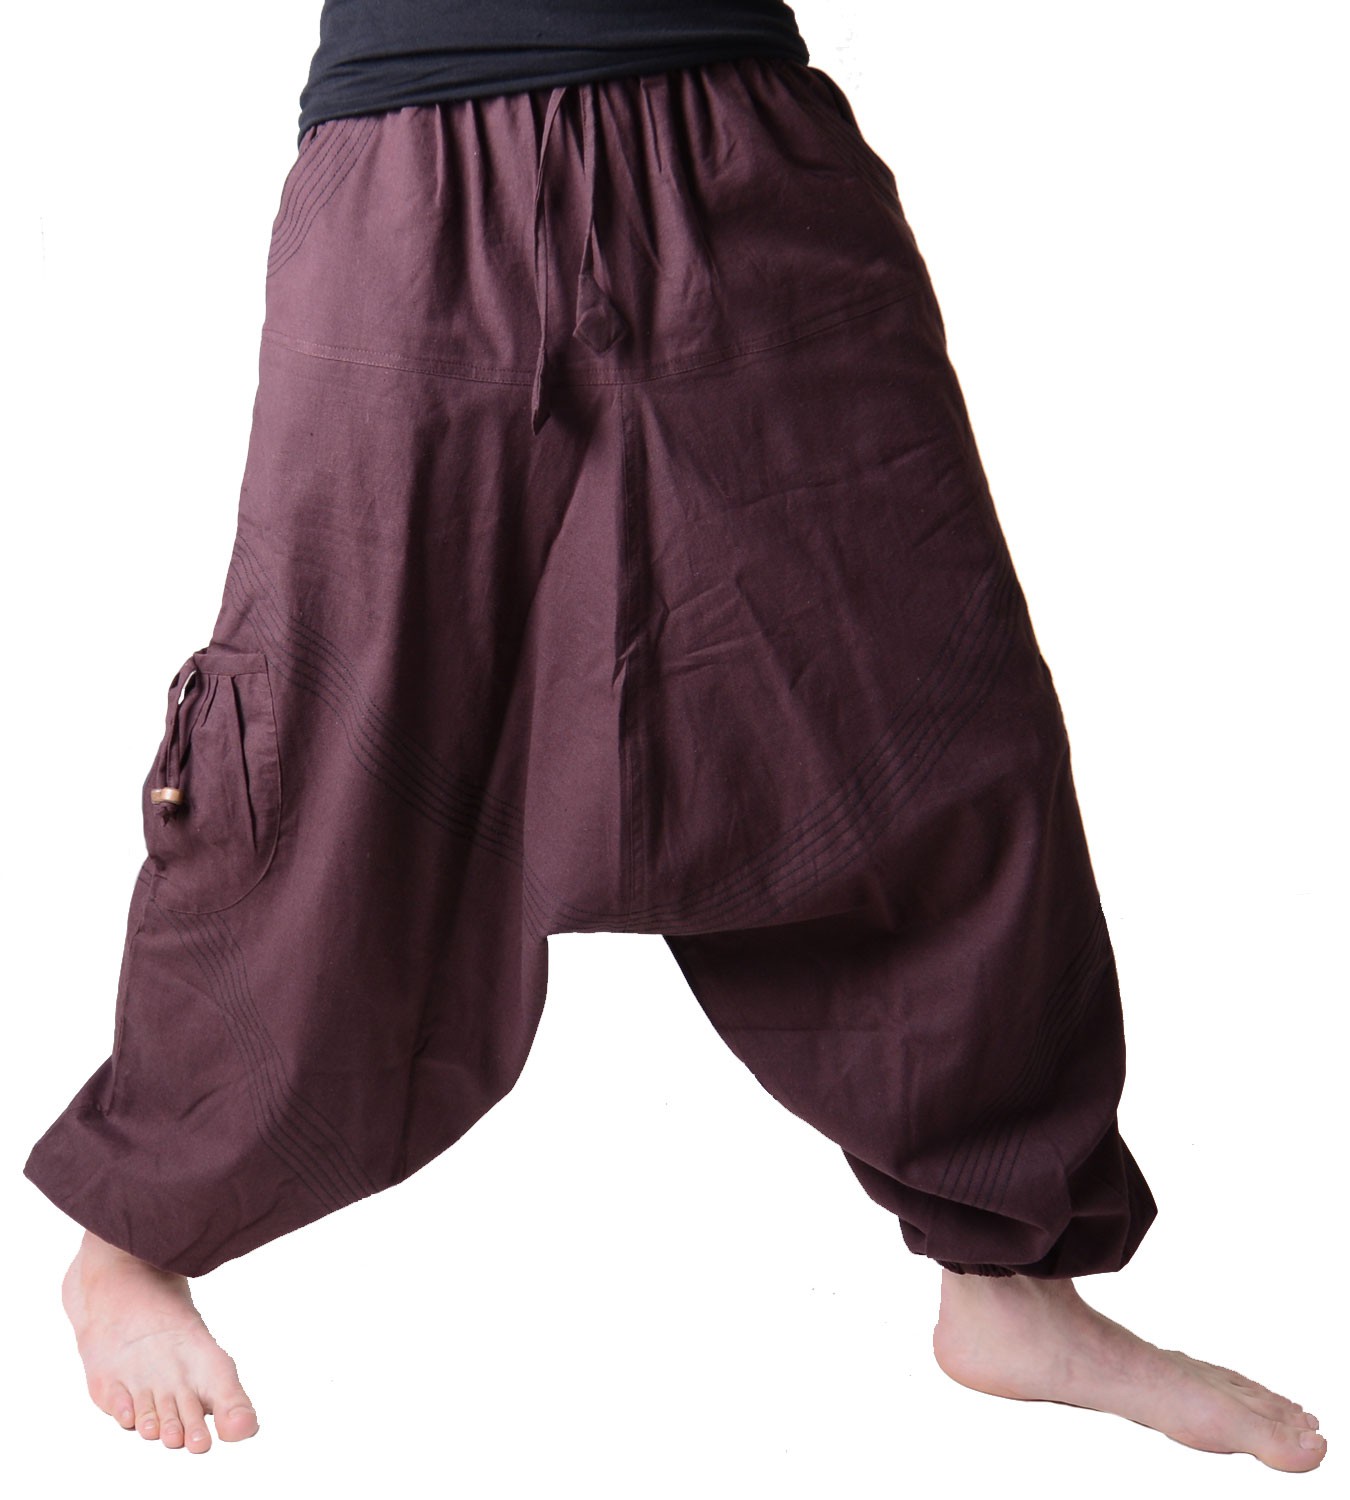 Men's Harem pants in classic Colors | eBay